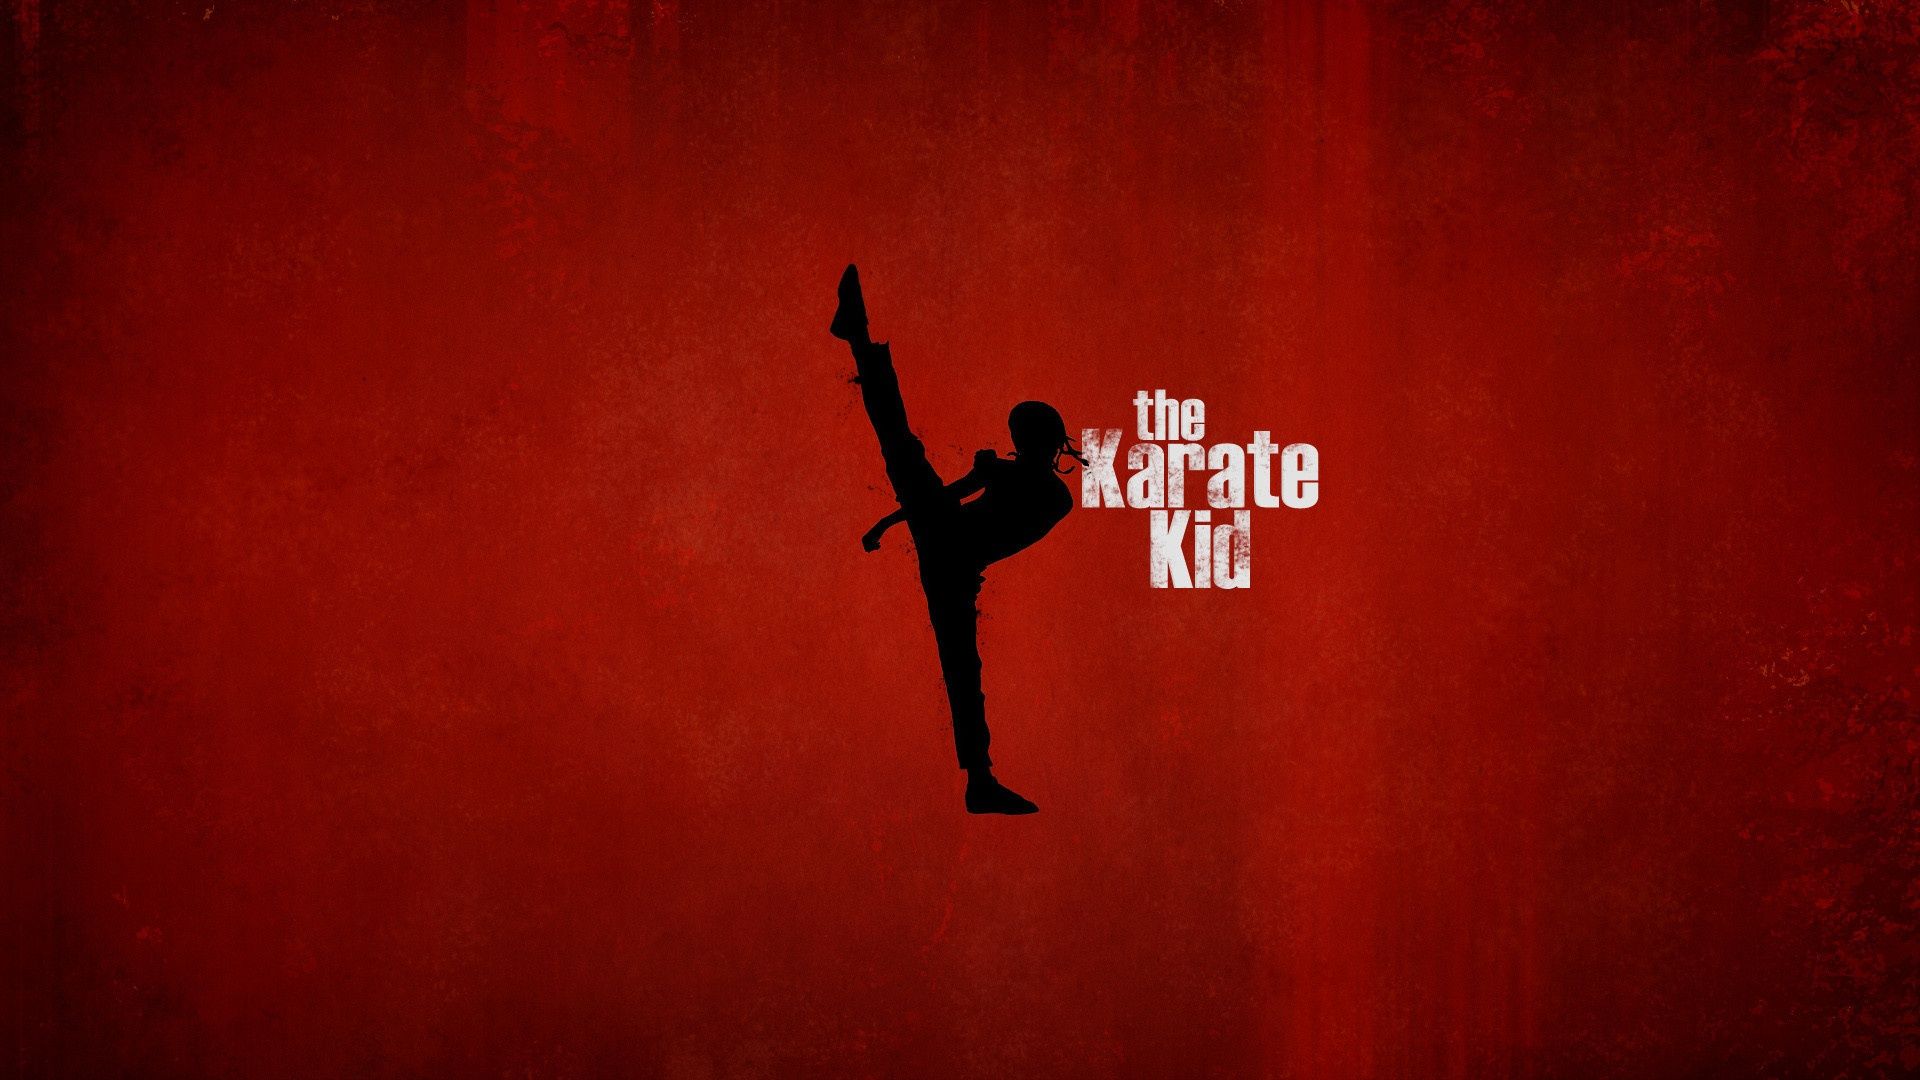 The Karate Kid Wallpaper in jpg format for free download